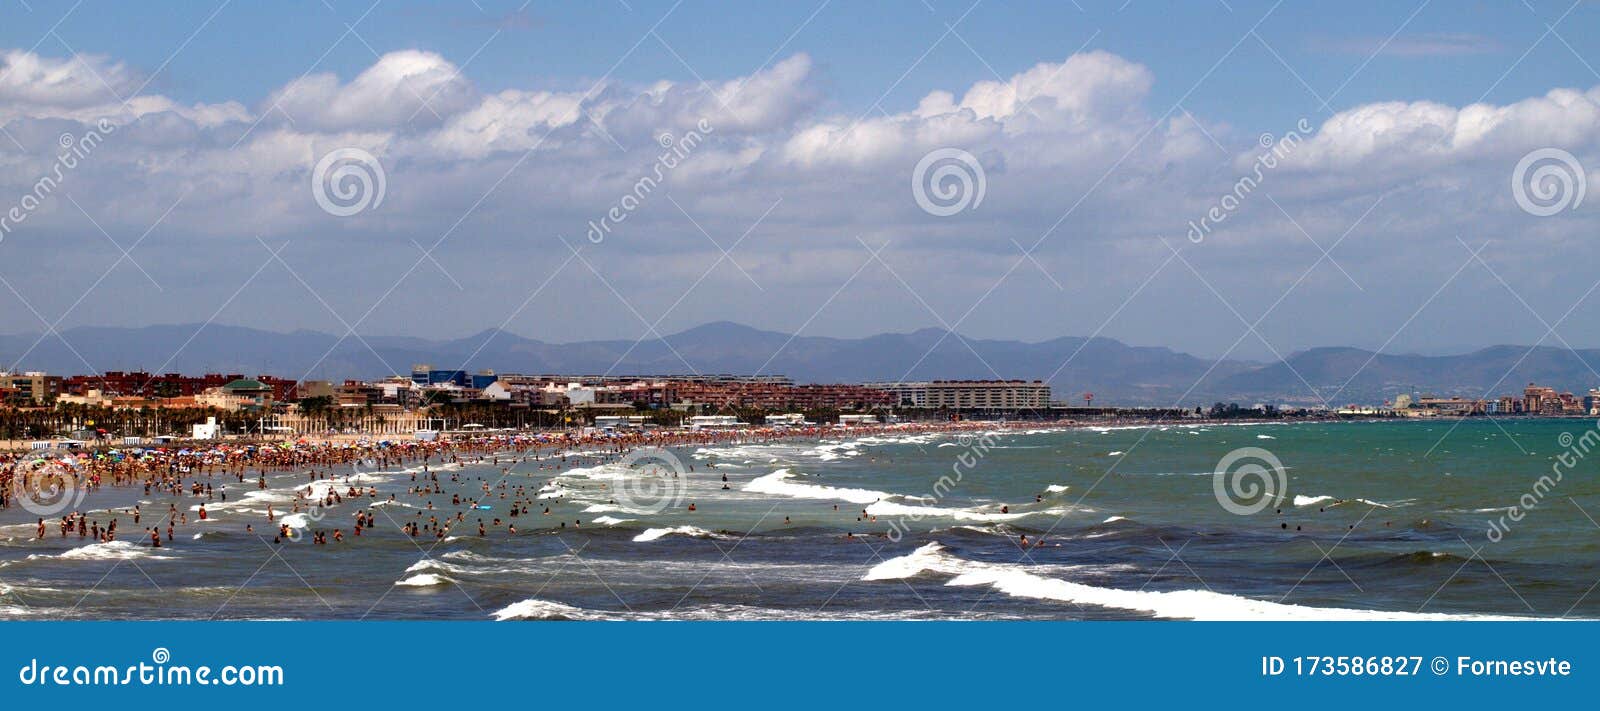 General View of the Malvarrosa Beach, Valencia. Spain Stock Image ...